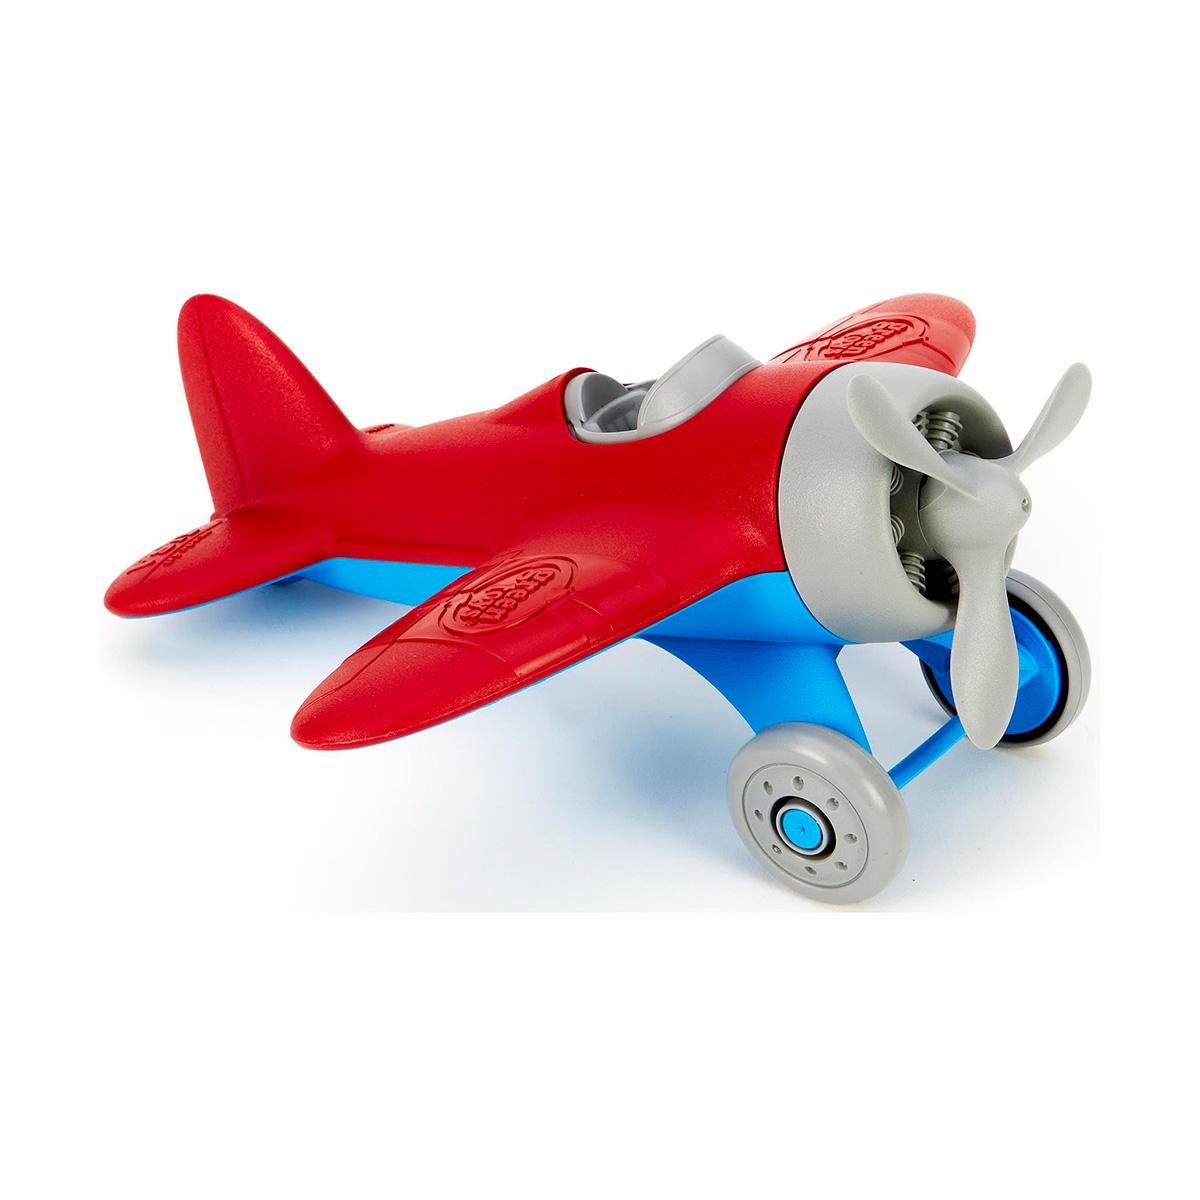 plastic aeroplane toy